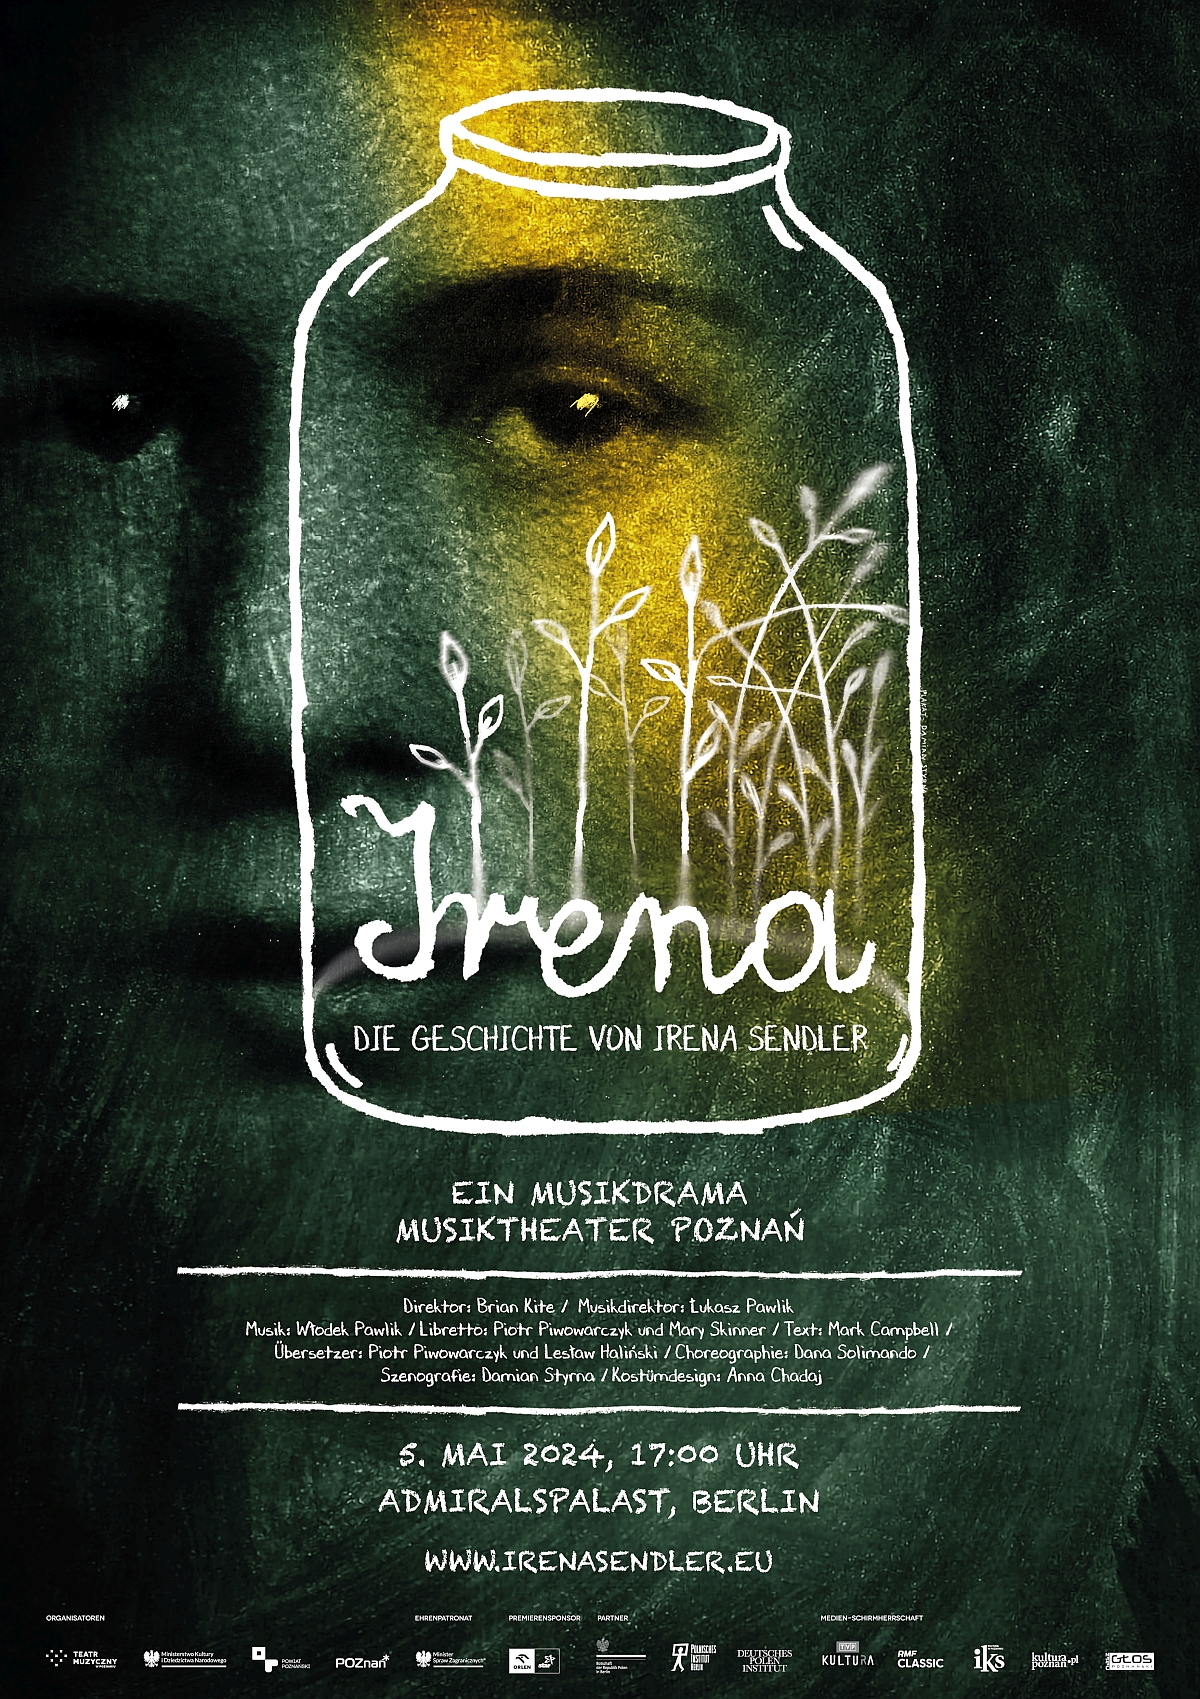 Irena Poster